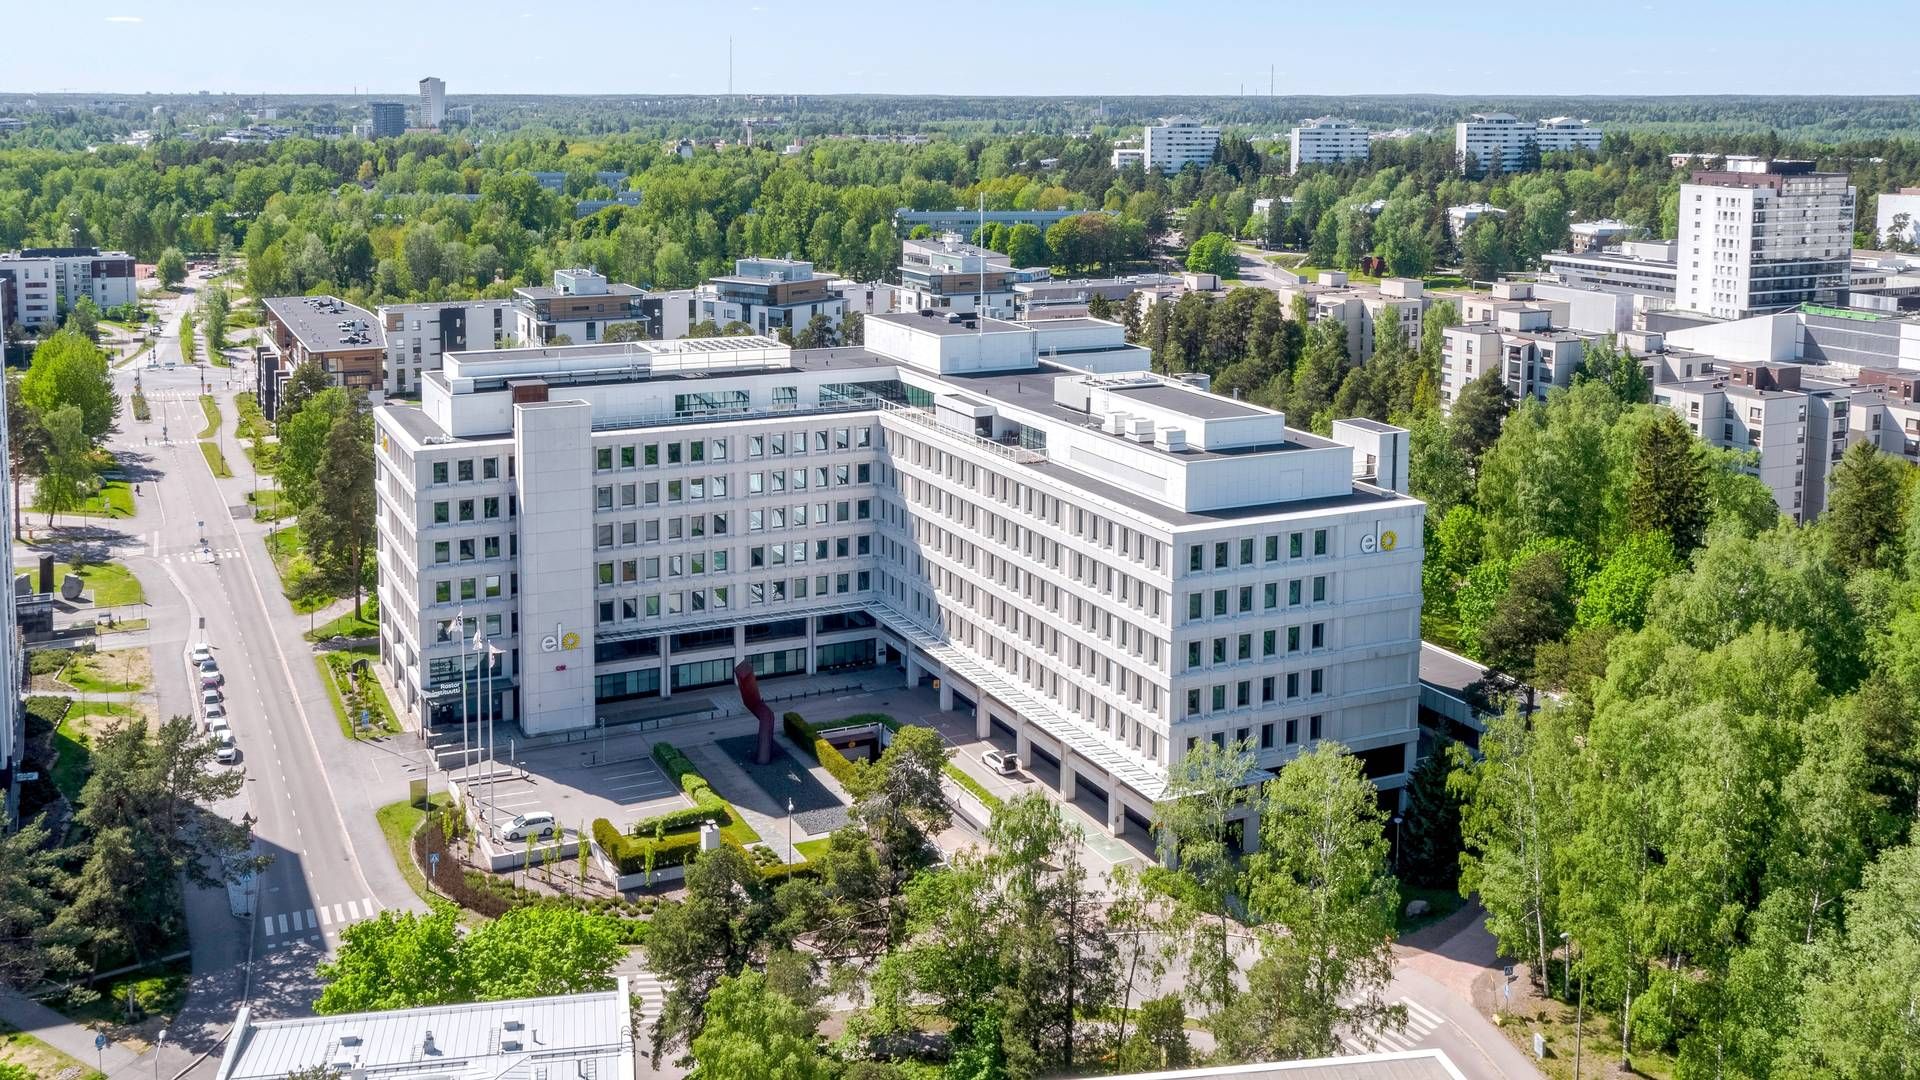 Headquarters of Elo Mutual Pension Insurance, Espoo, Finland. | Photo: Elo PR.